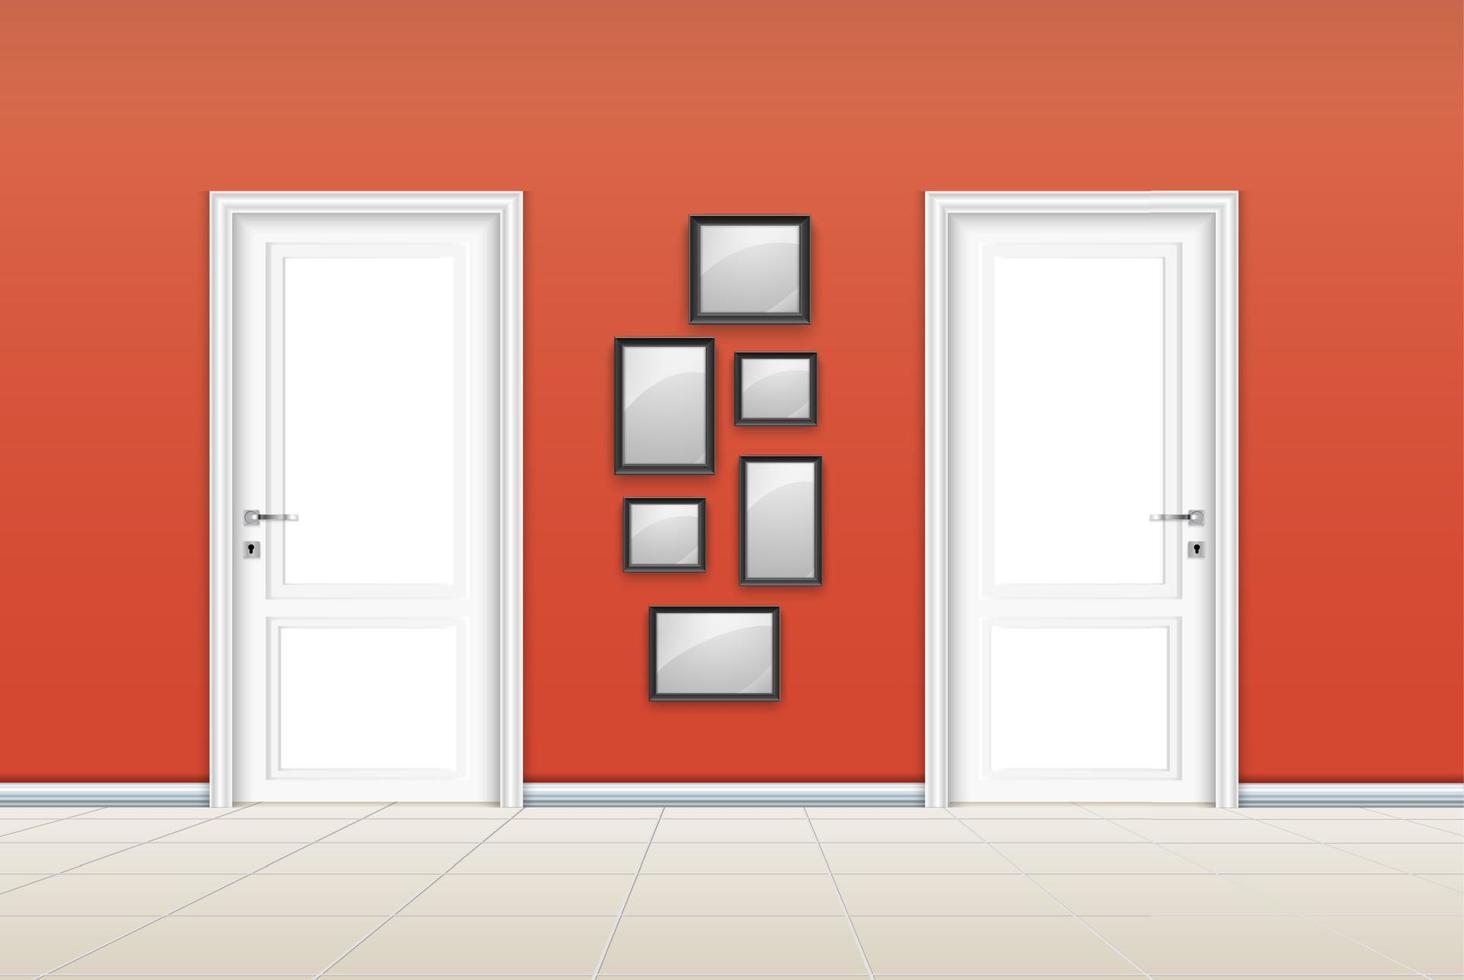 woonkamer interieur met gesloten deur en lege frames op de oranje muur vector